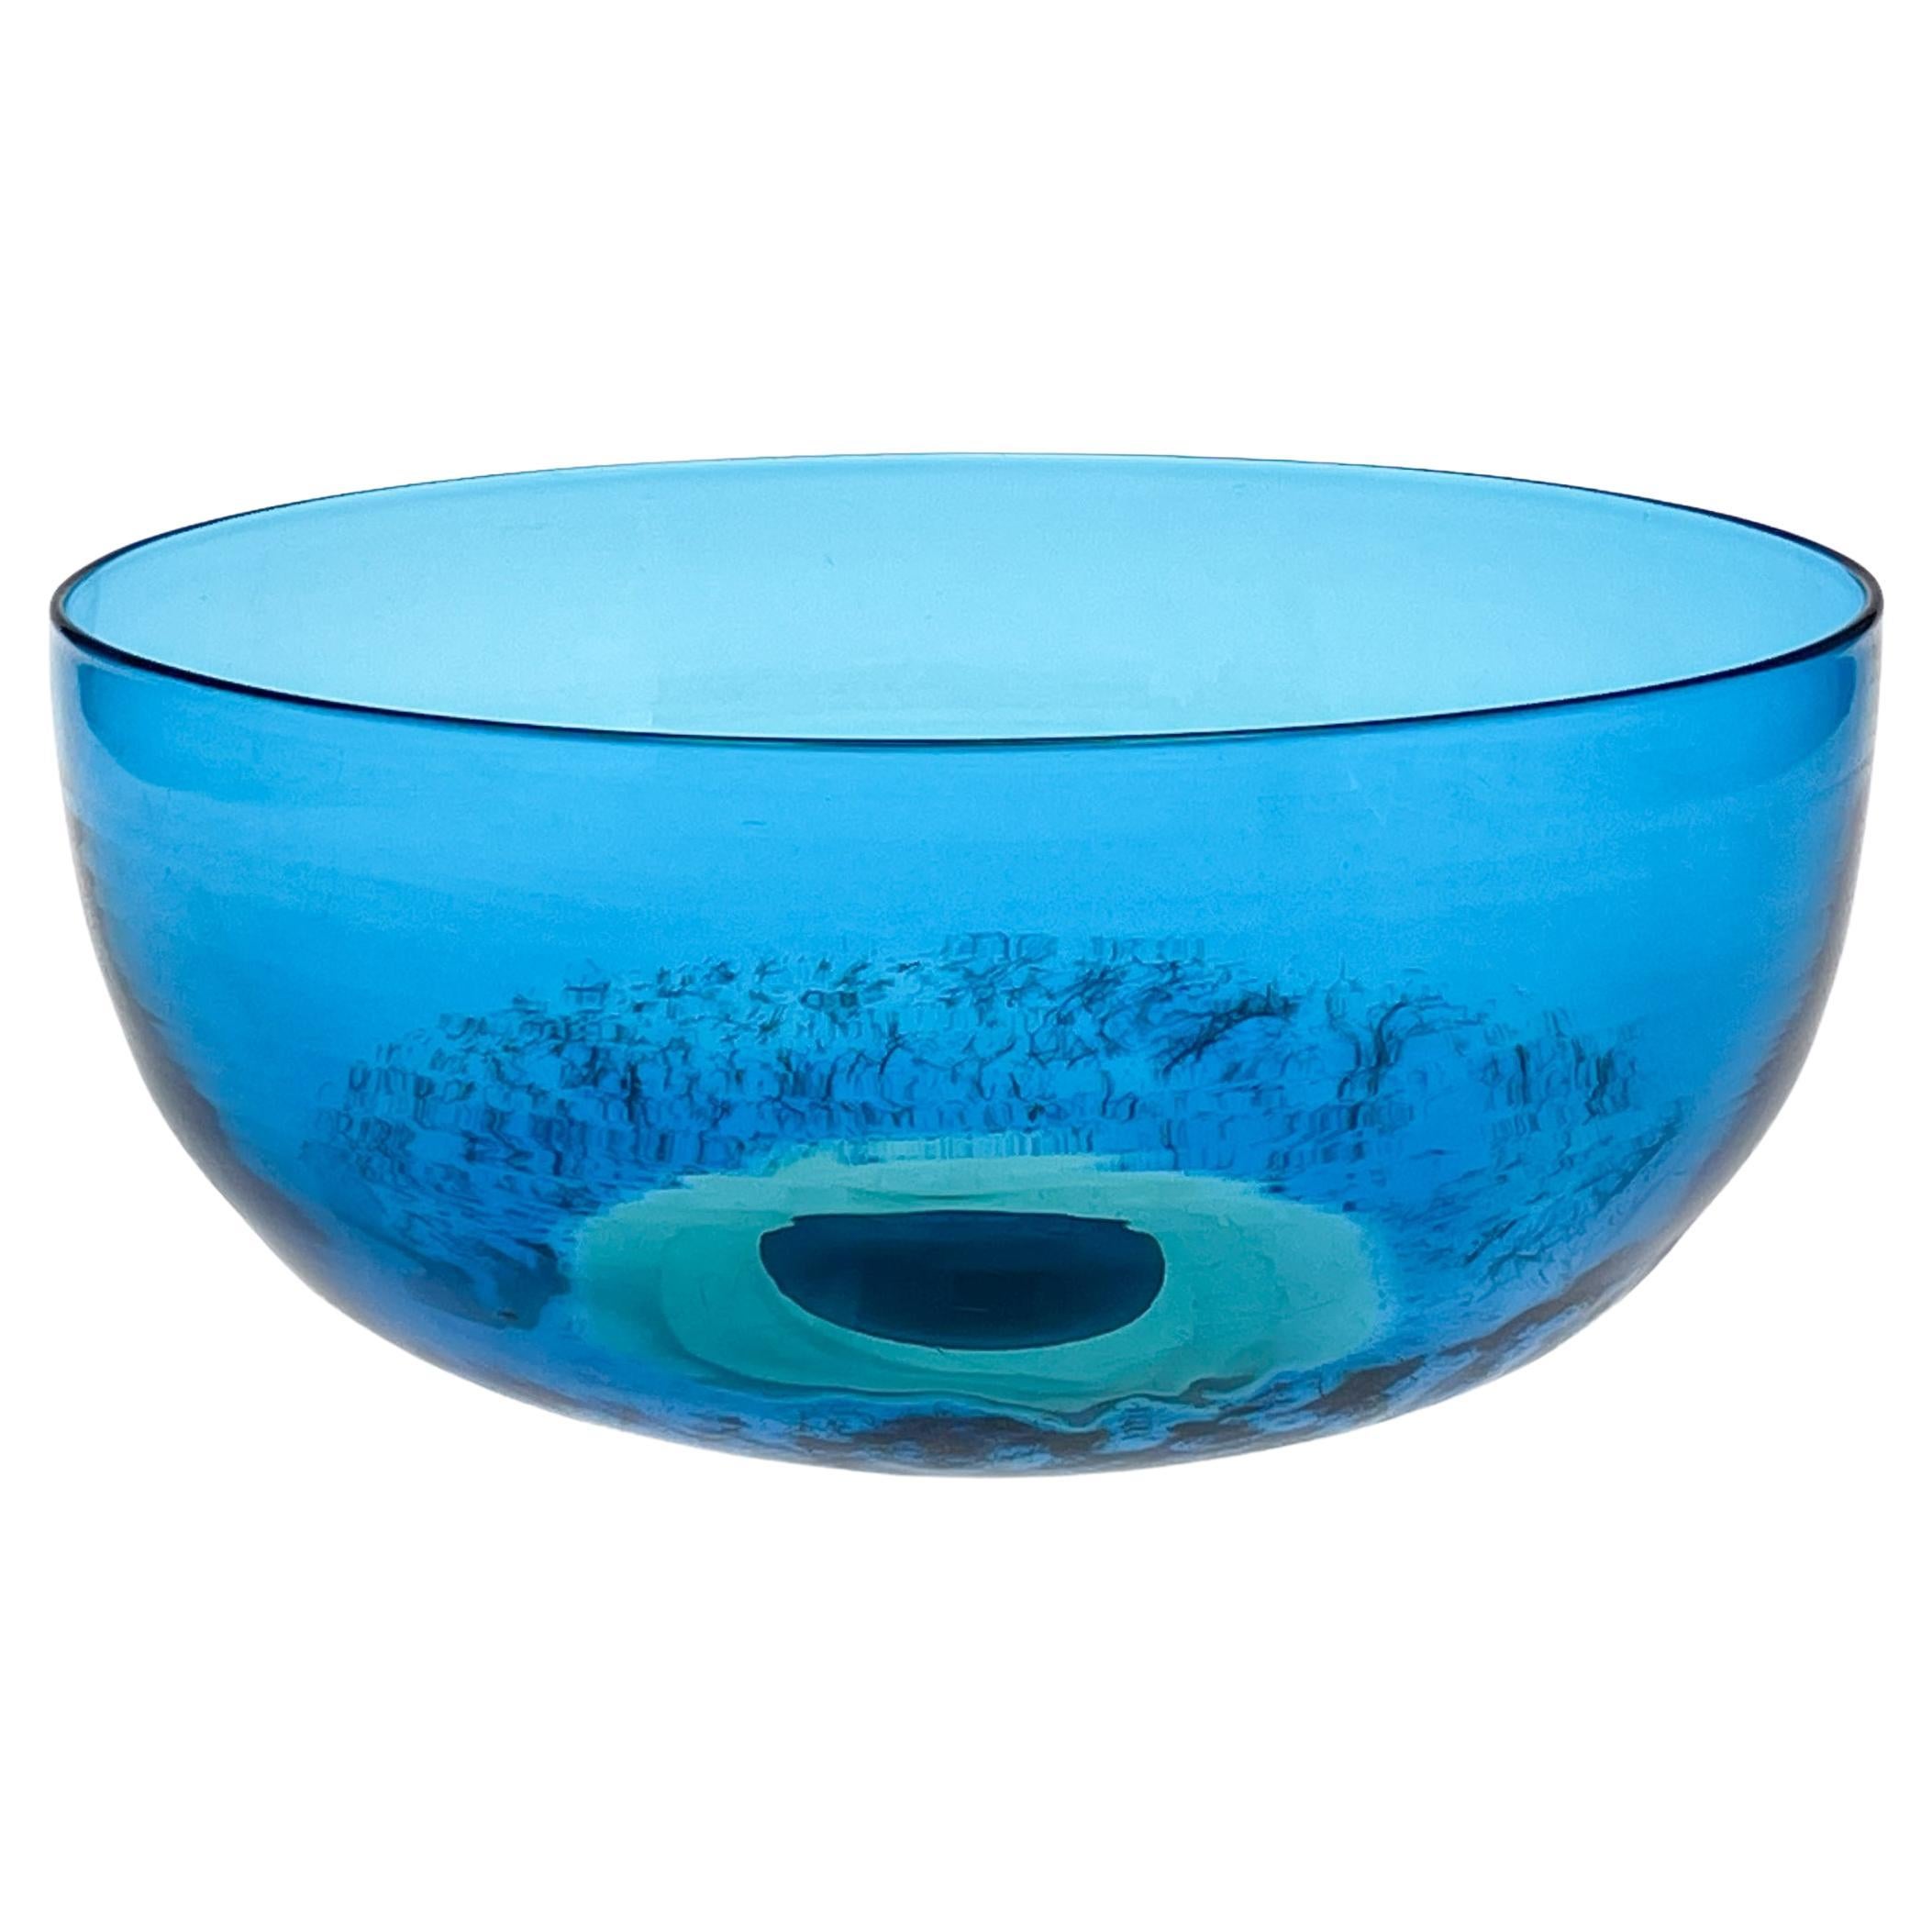 Murano Tapio Wirkkala Art Glass bowl "Inari" turquoise yellow handblown Venini For Sale